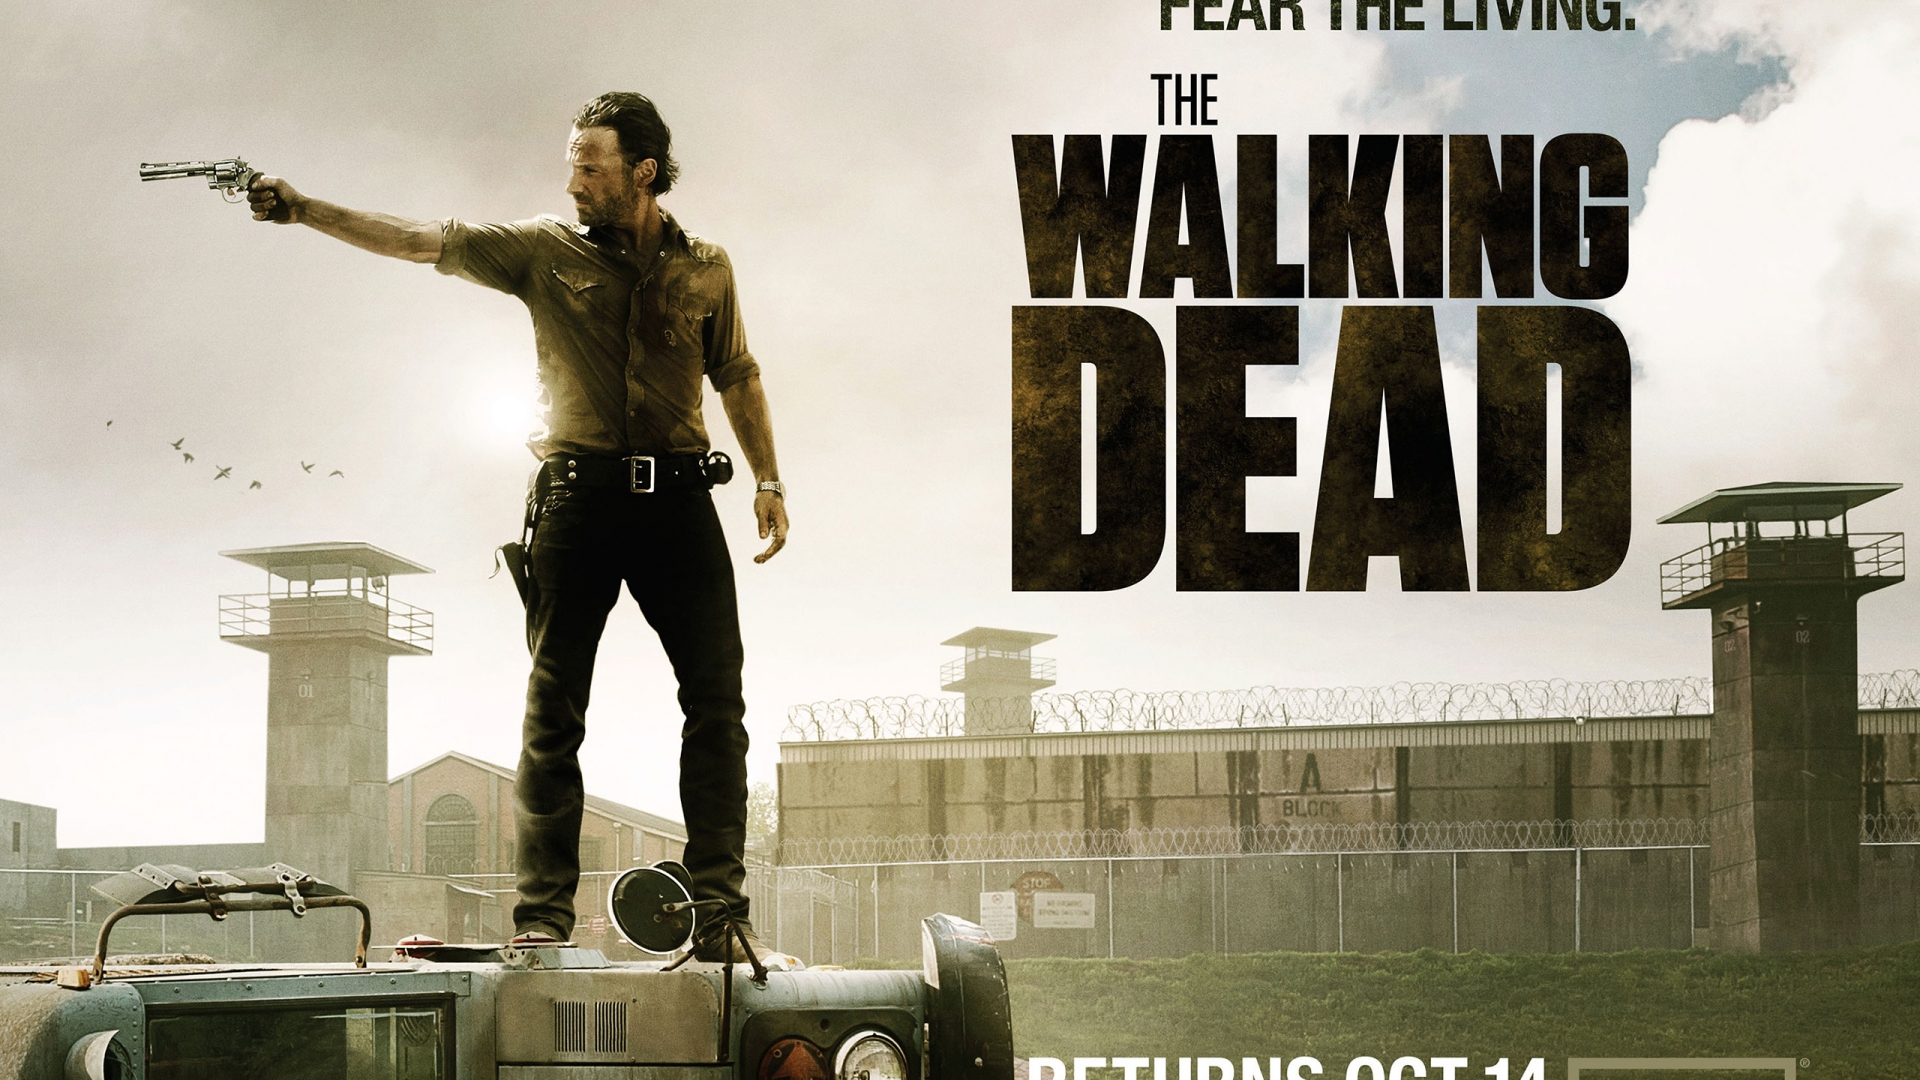 The Walking Dead Season 4 for 1920 x 1080 HDTV 1080p resolution